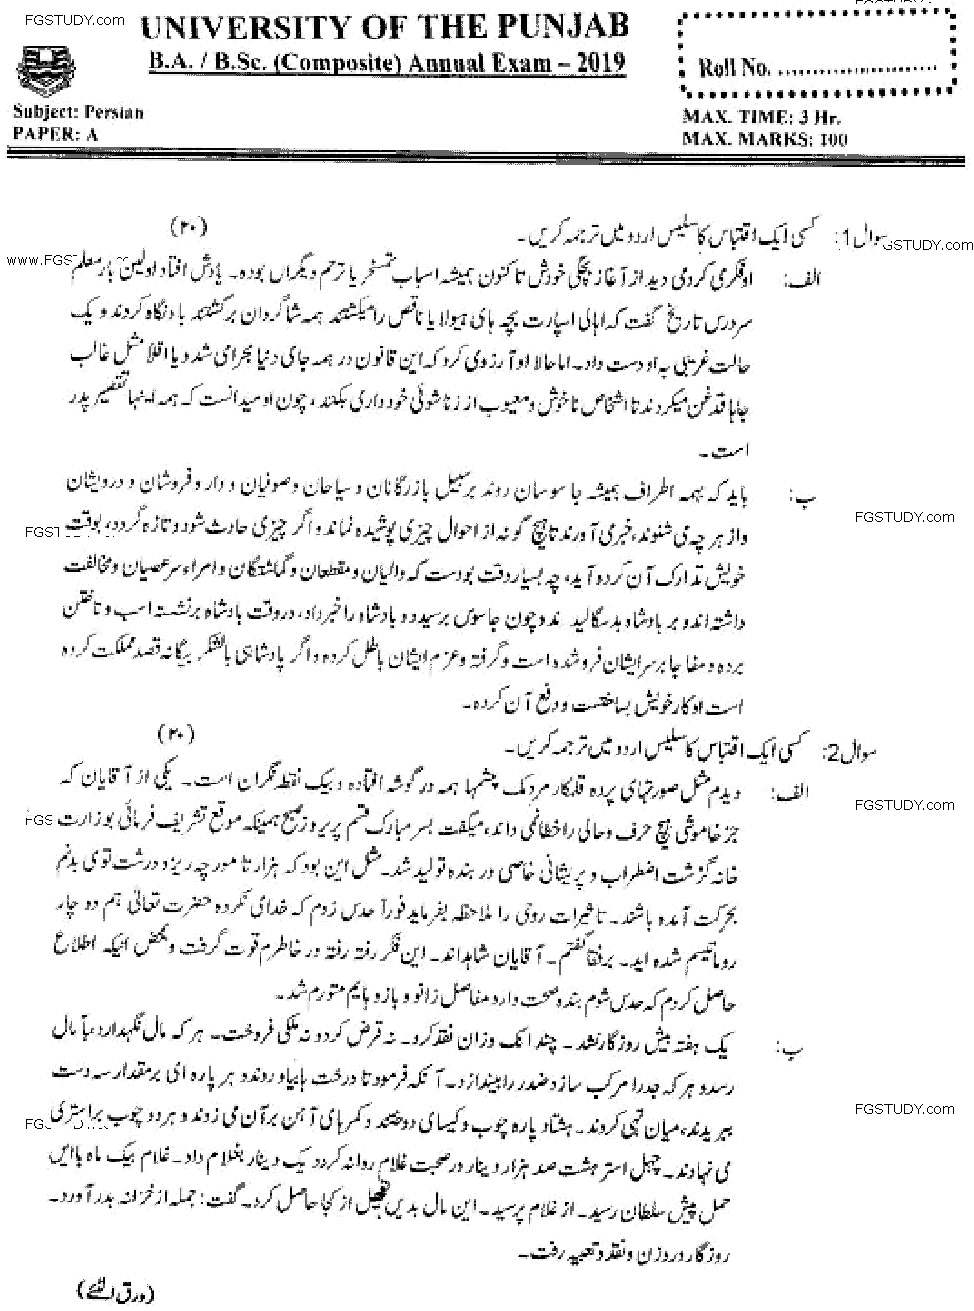 Ba Persian Past Paper 2019 Punjab University